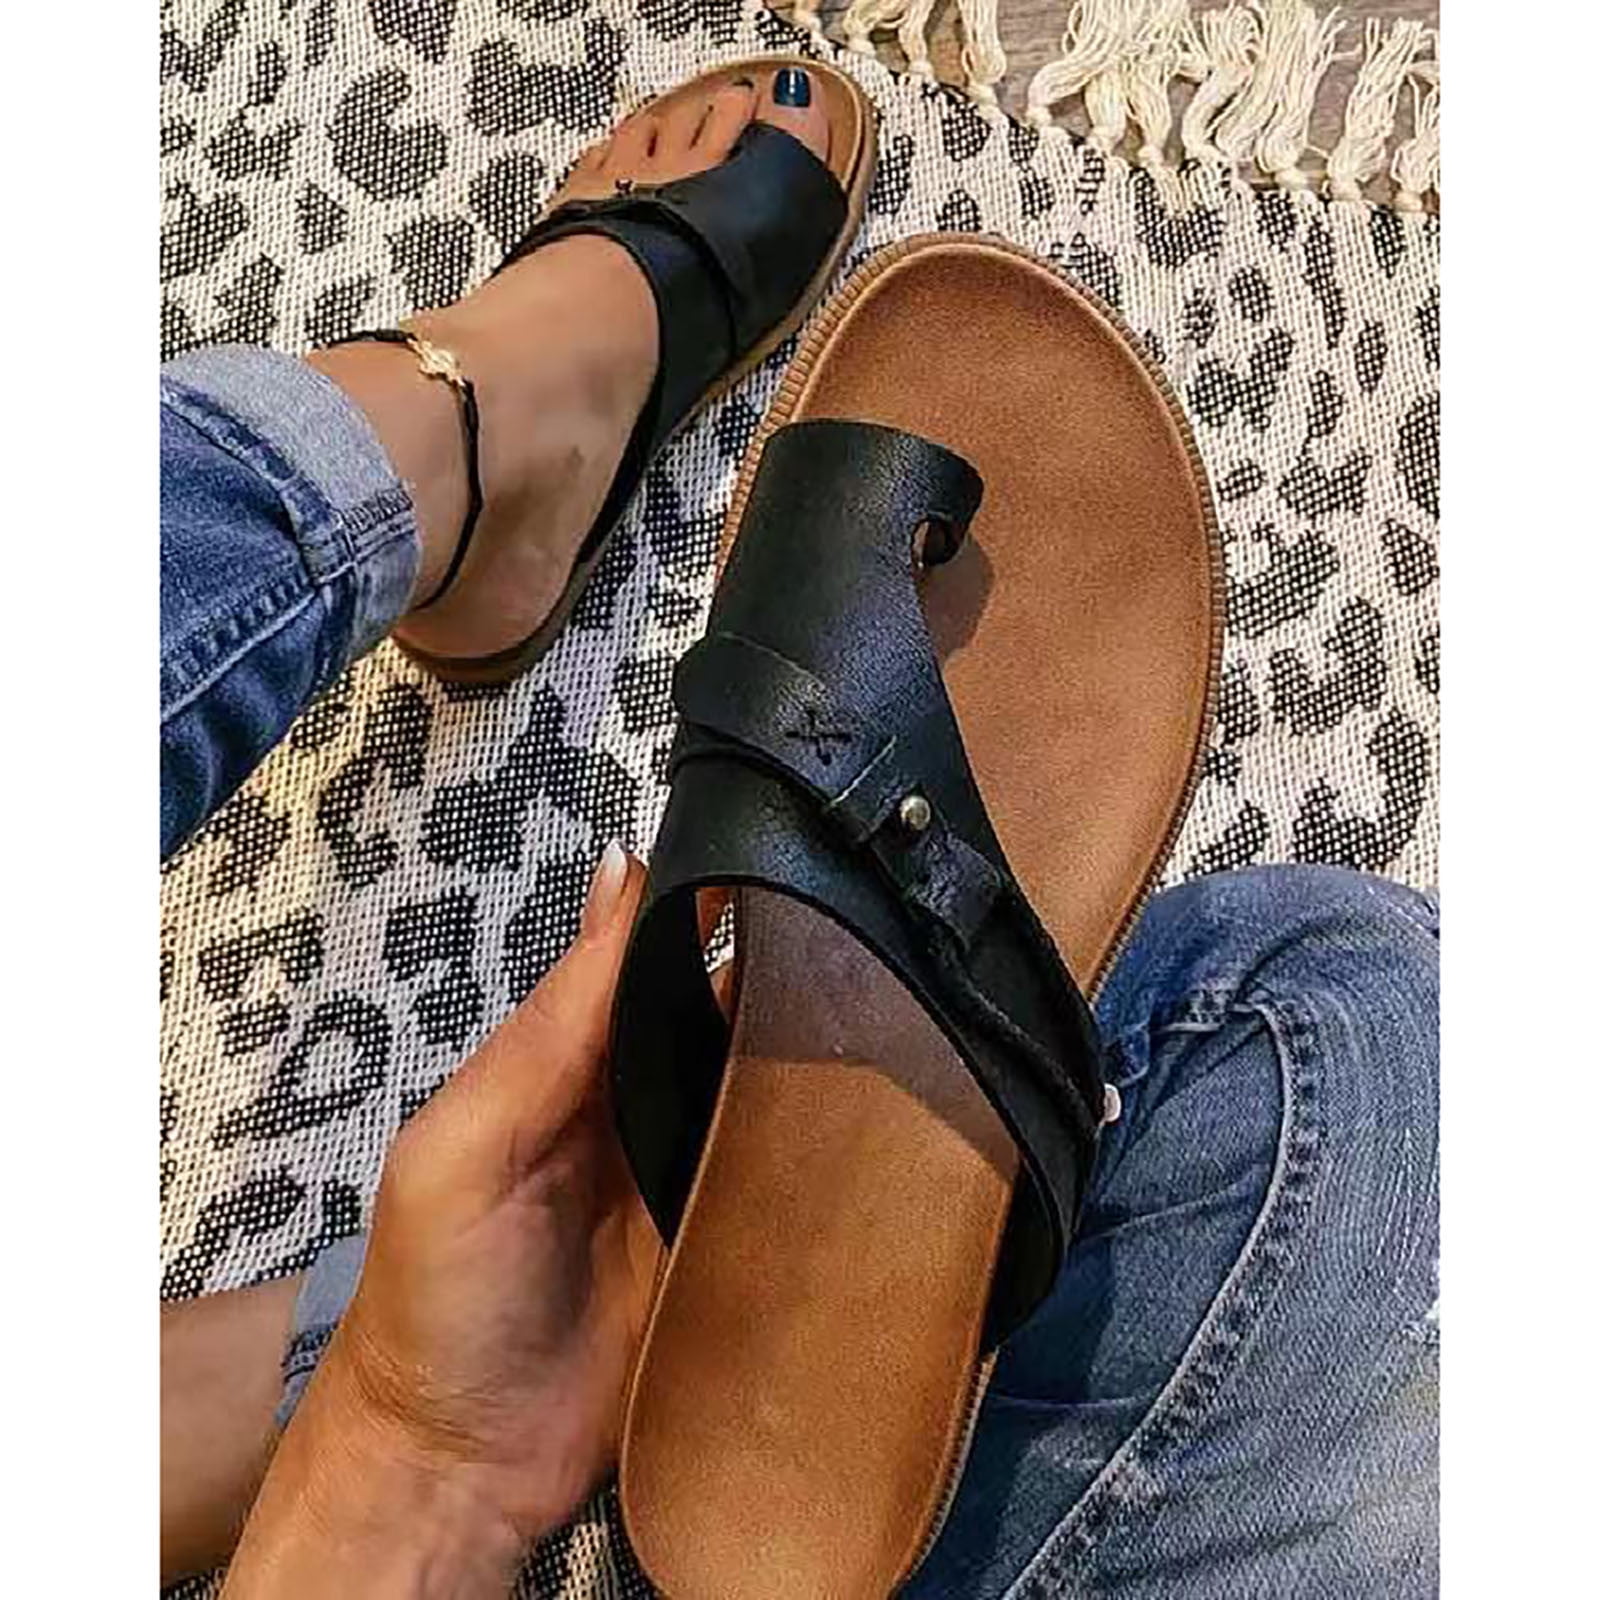 flat comfort sandal